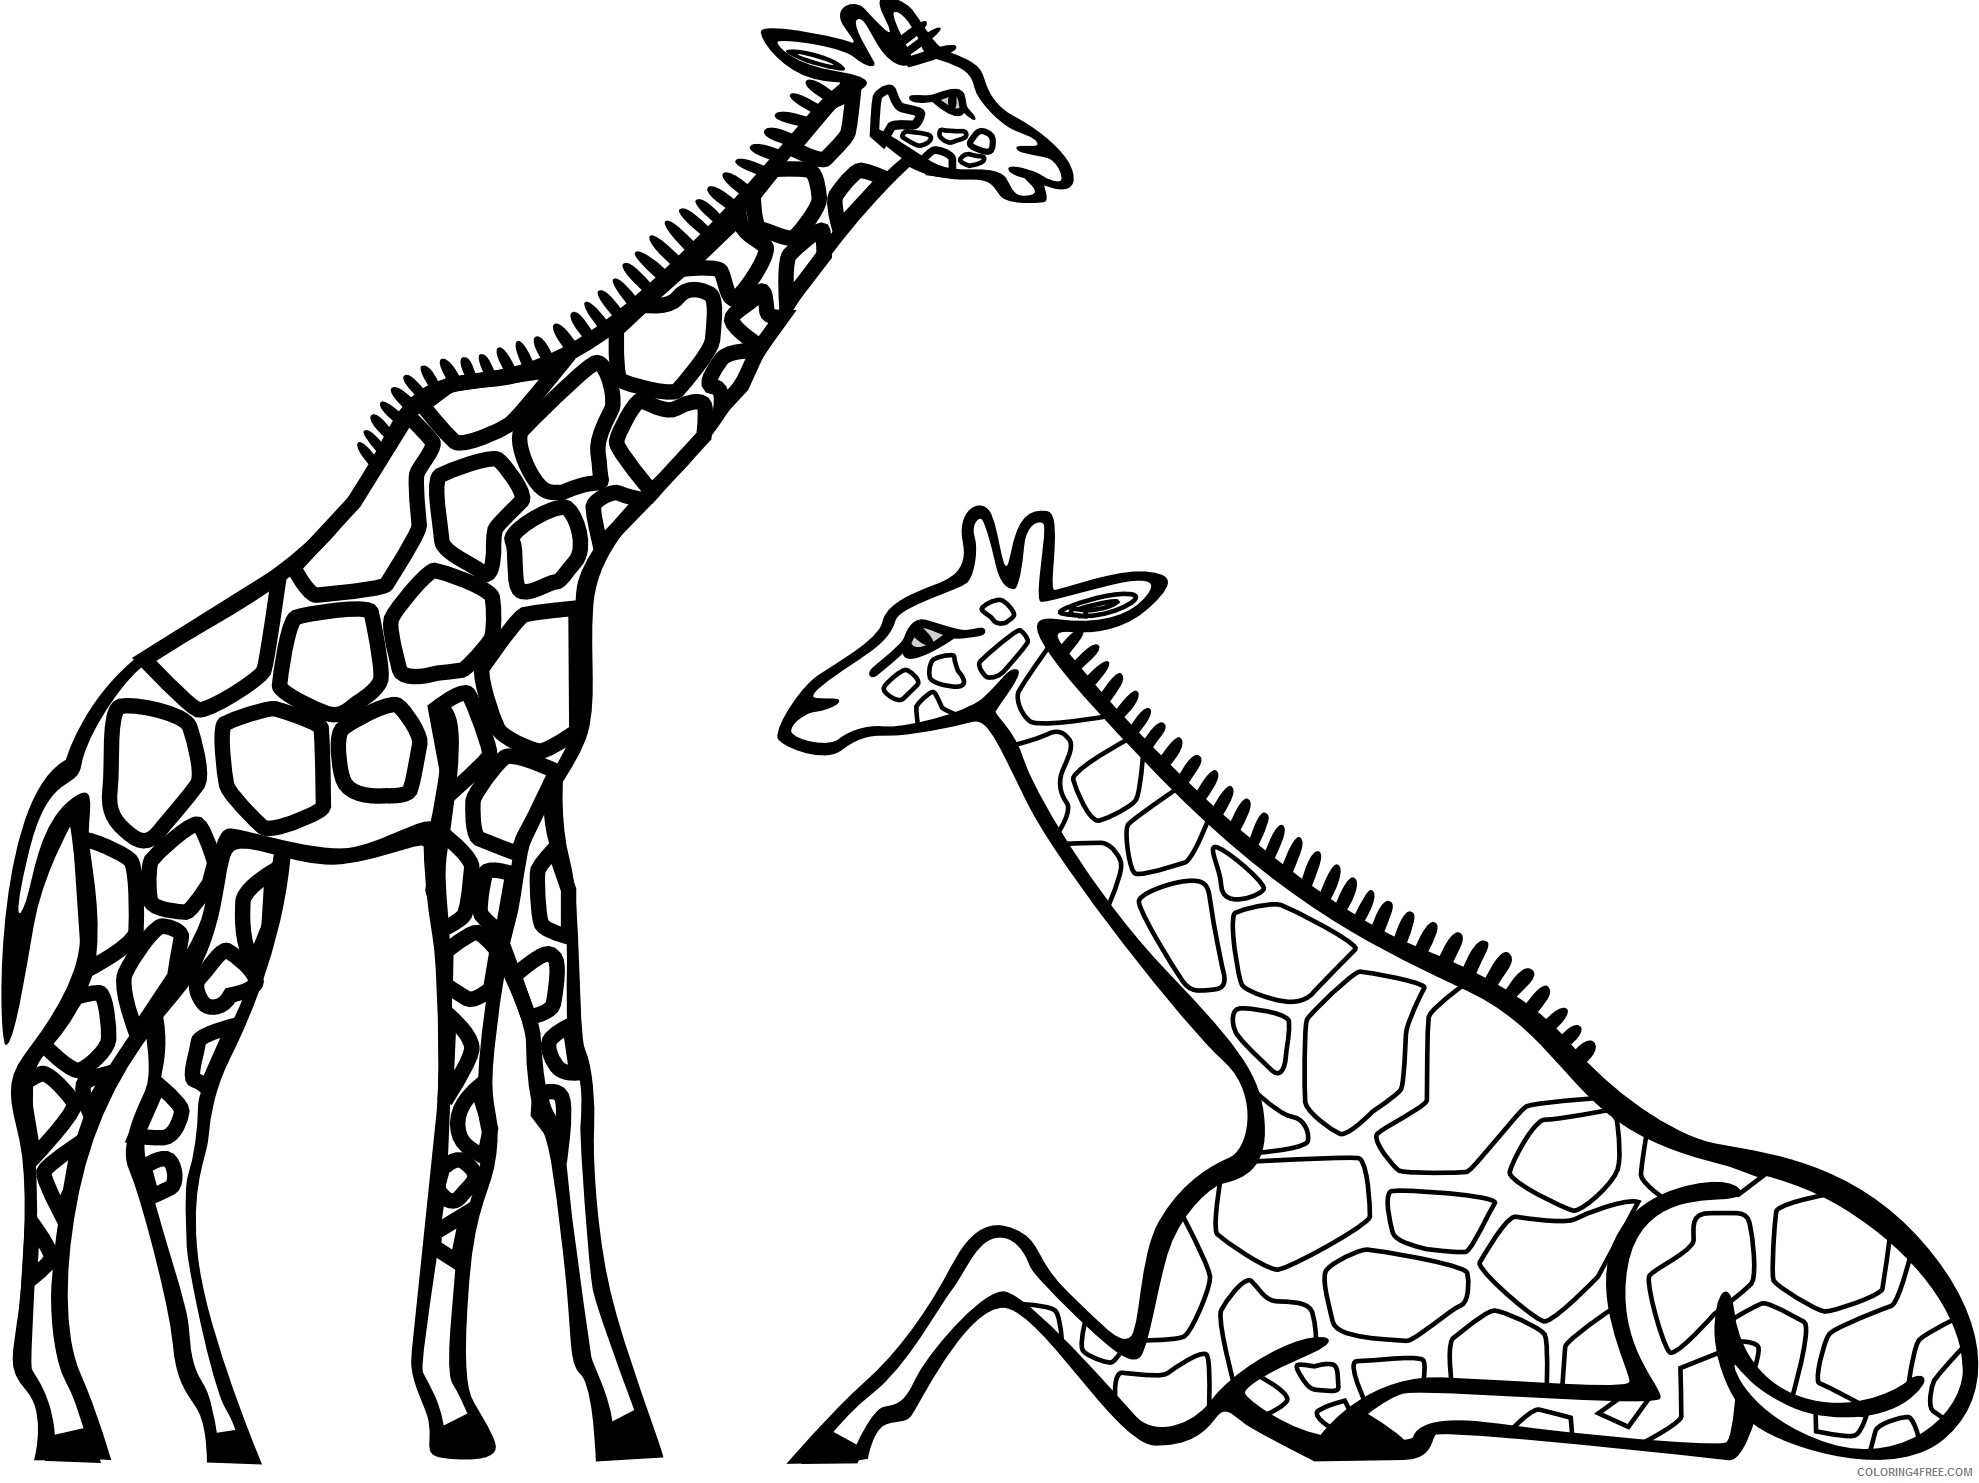 Giraffe Coloring Pages Animal Printable Sheets Giraffe To Print 2 2021 2408 Coloring4free